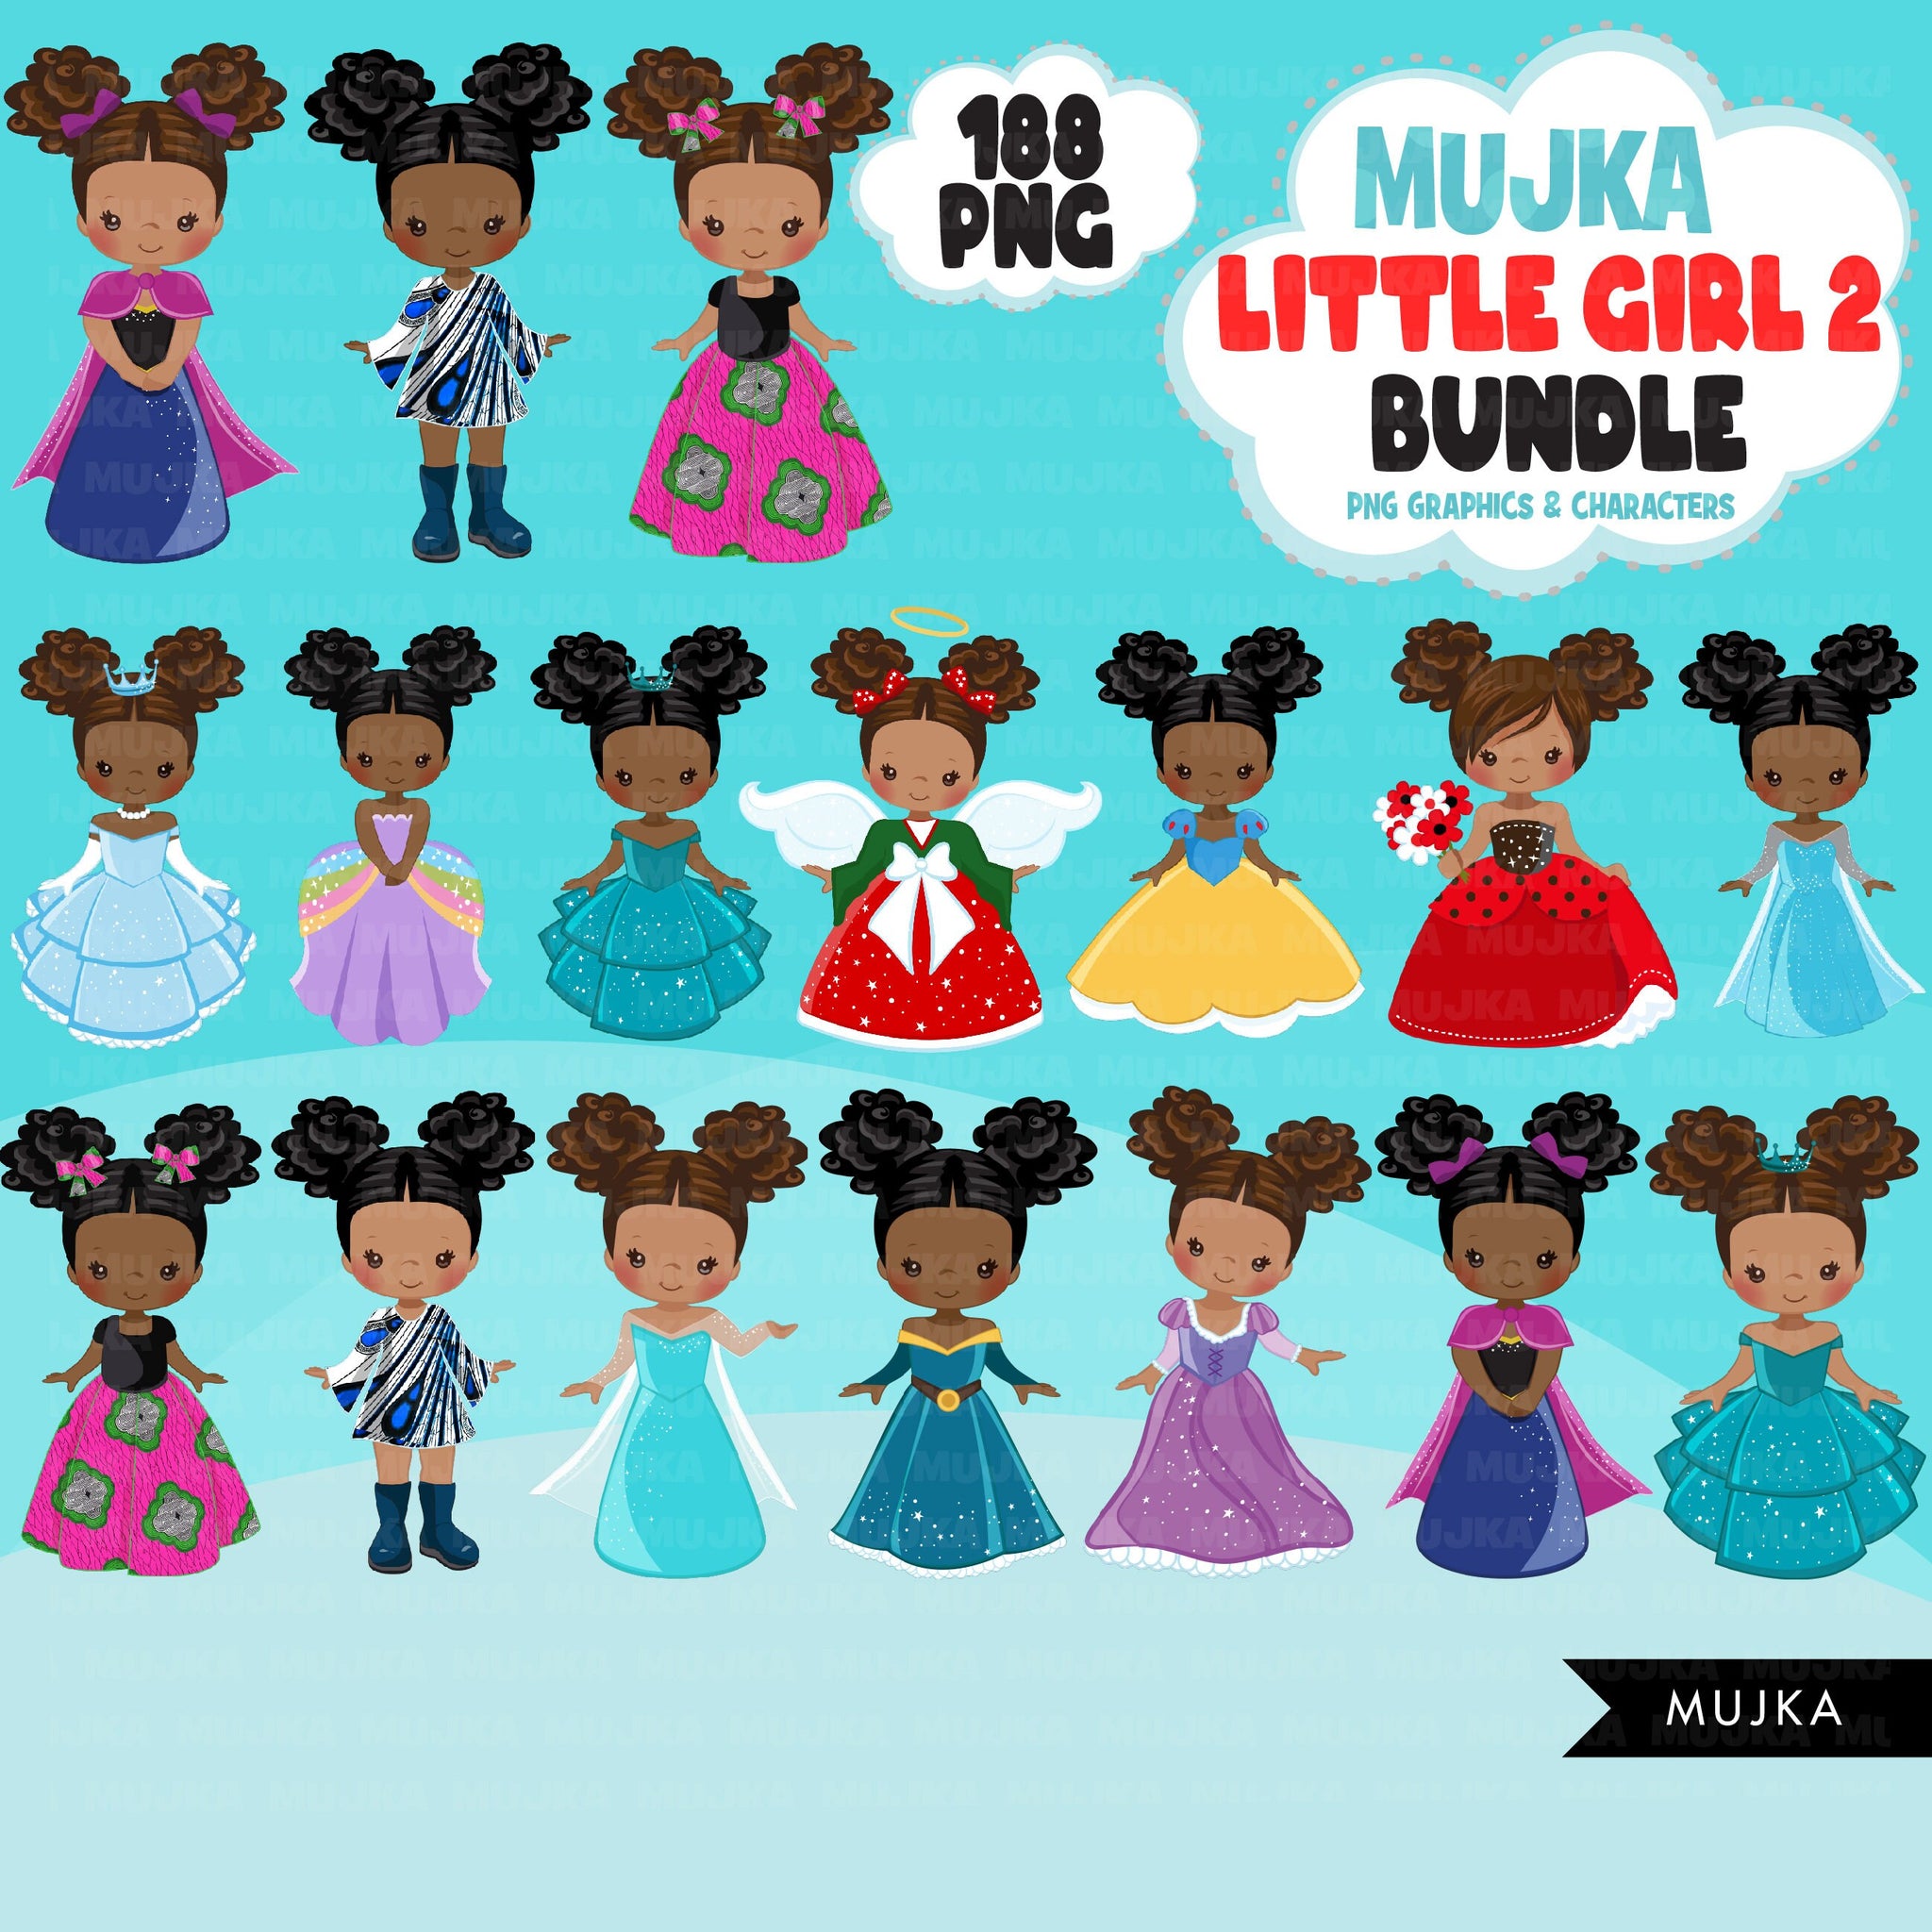 Black girl png Bundle, Black girl magic, afro puff black girl art, little girl digital stickers, cute black girl bundle, planner stickers